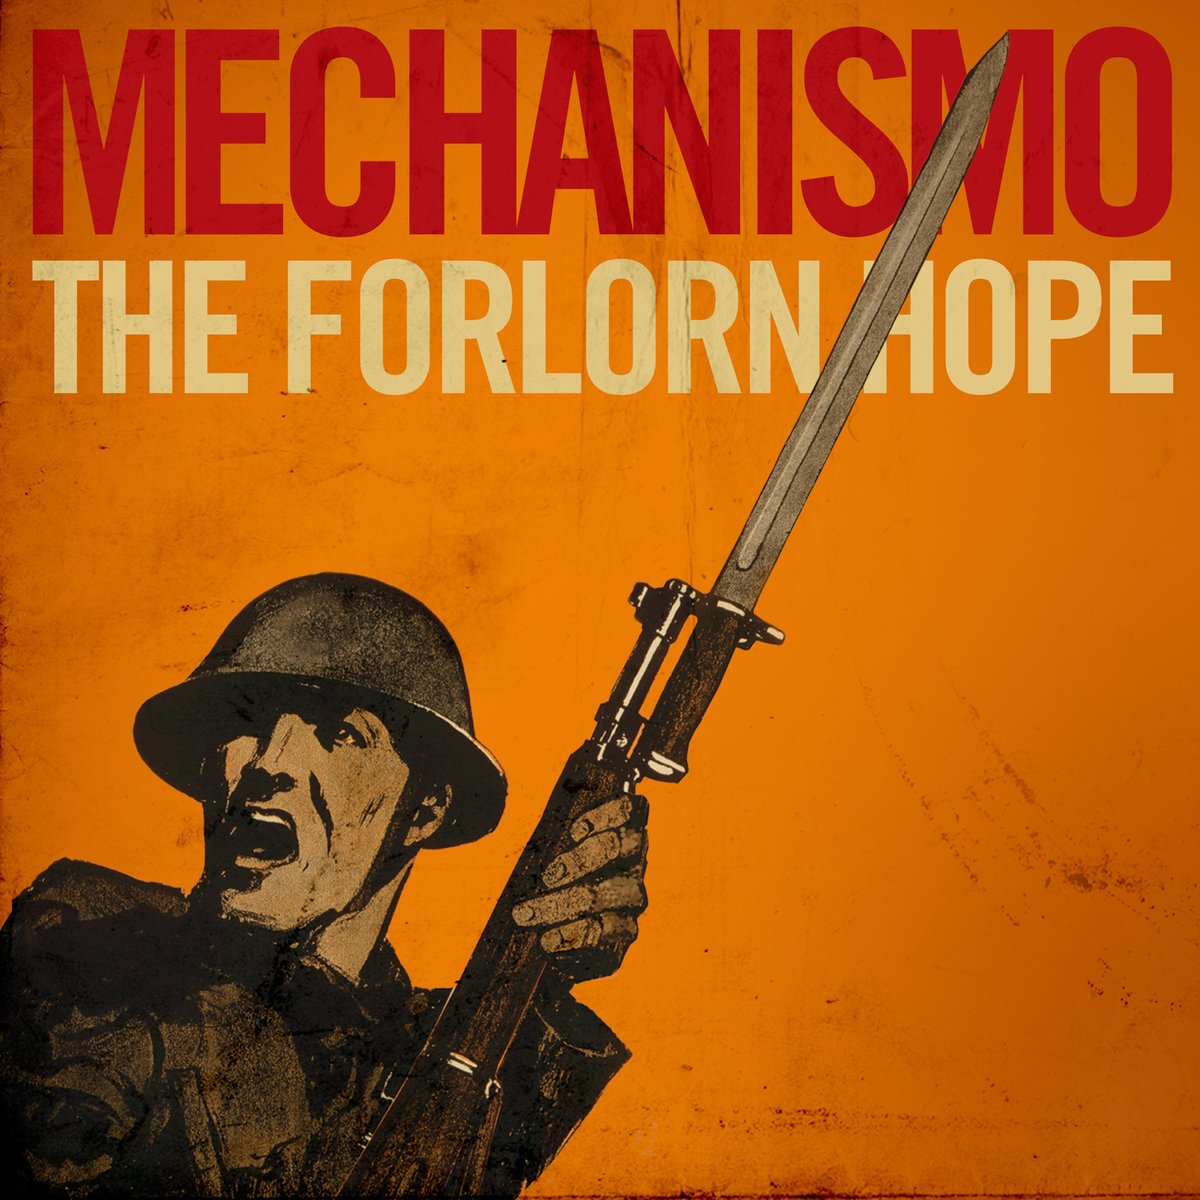 Mechanismo-The Forlorn Hope-CD-FLAC-2016-6DM